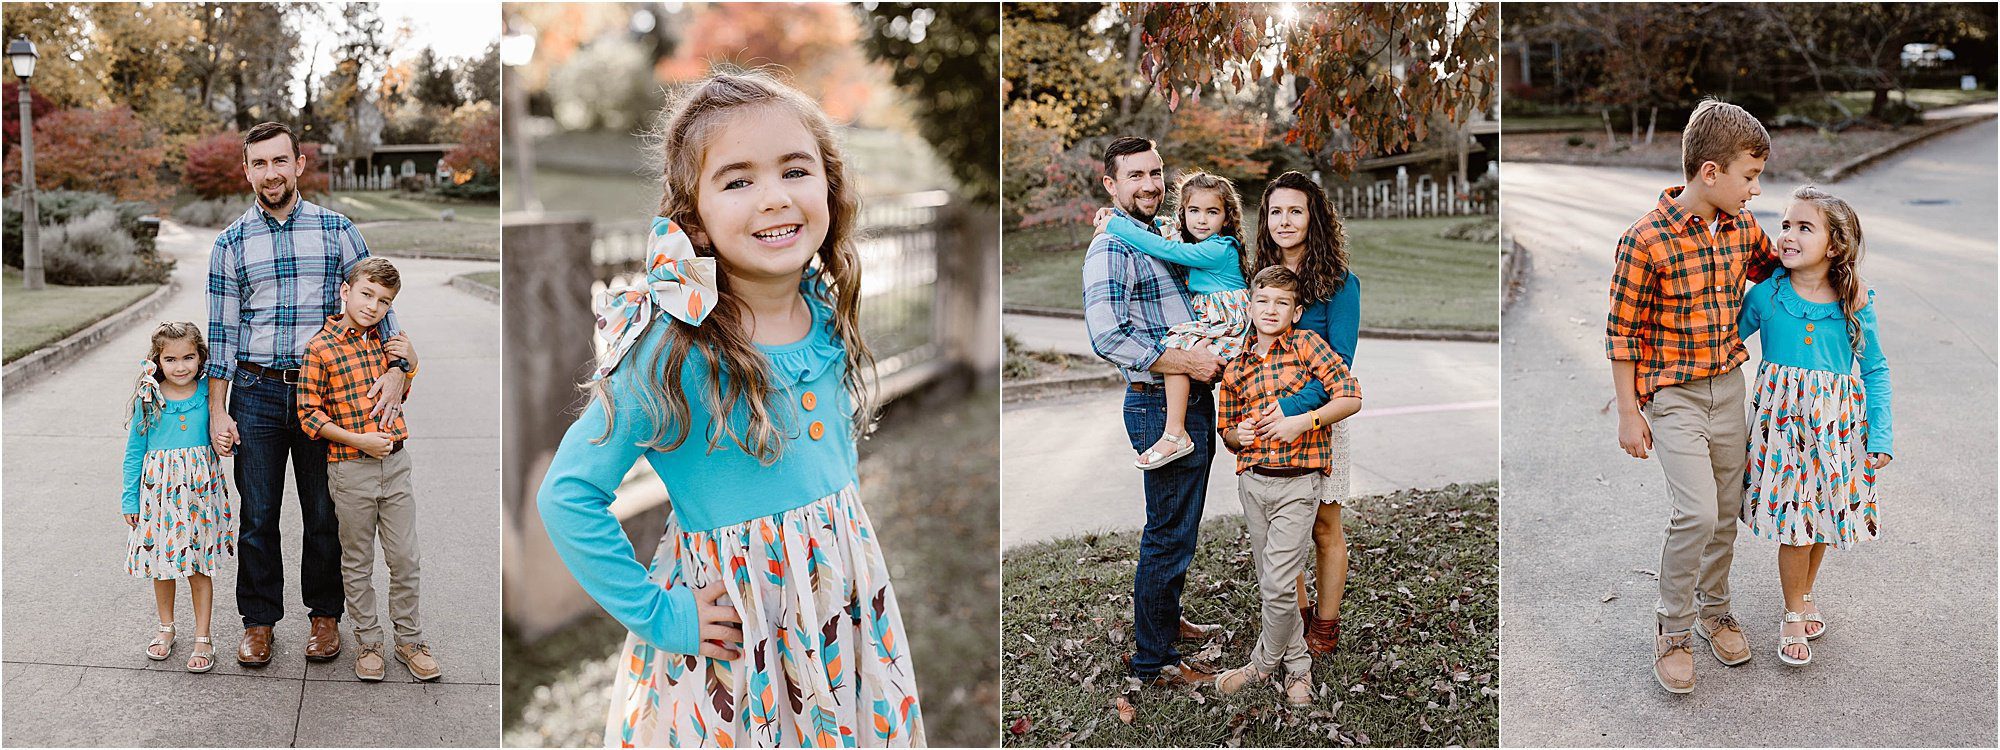 Family Photos in Sequoyah Hills